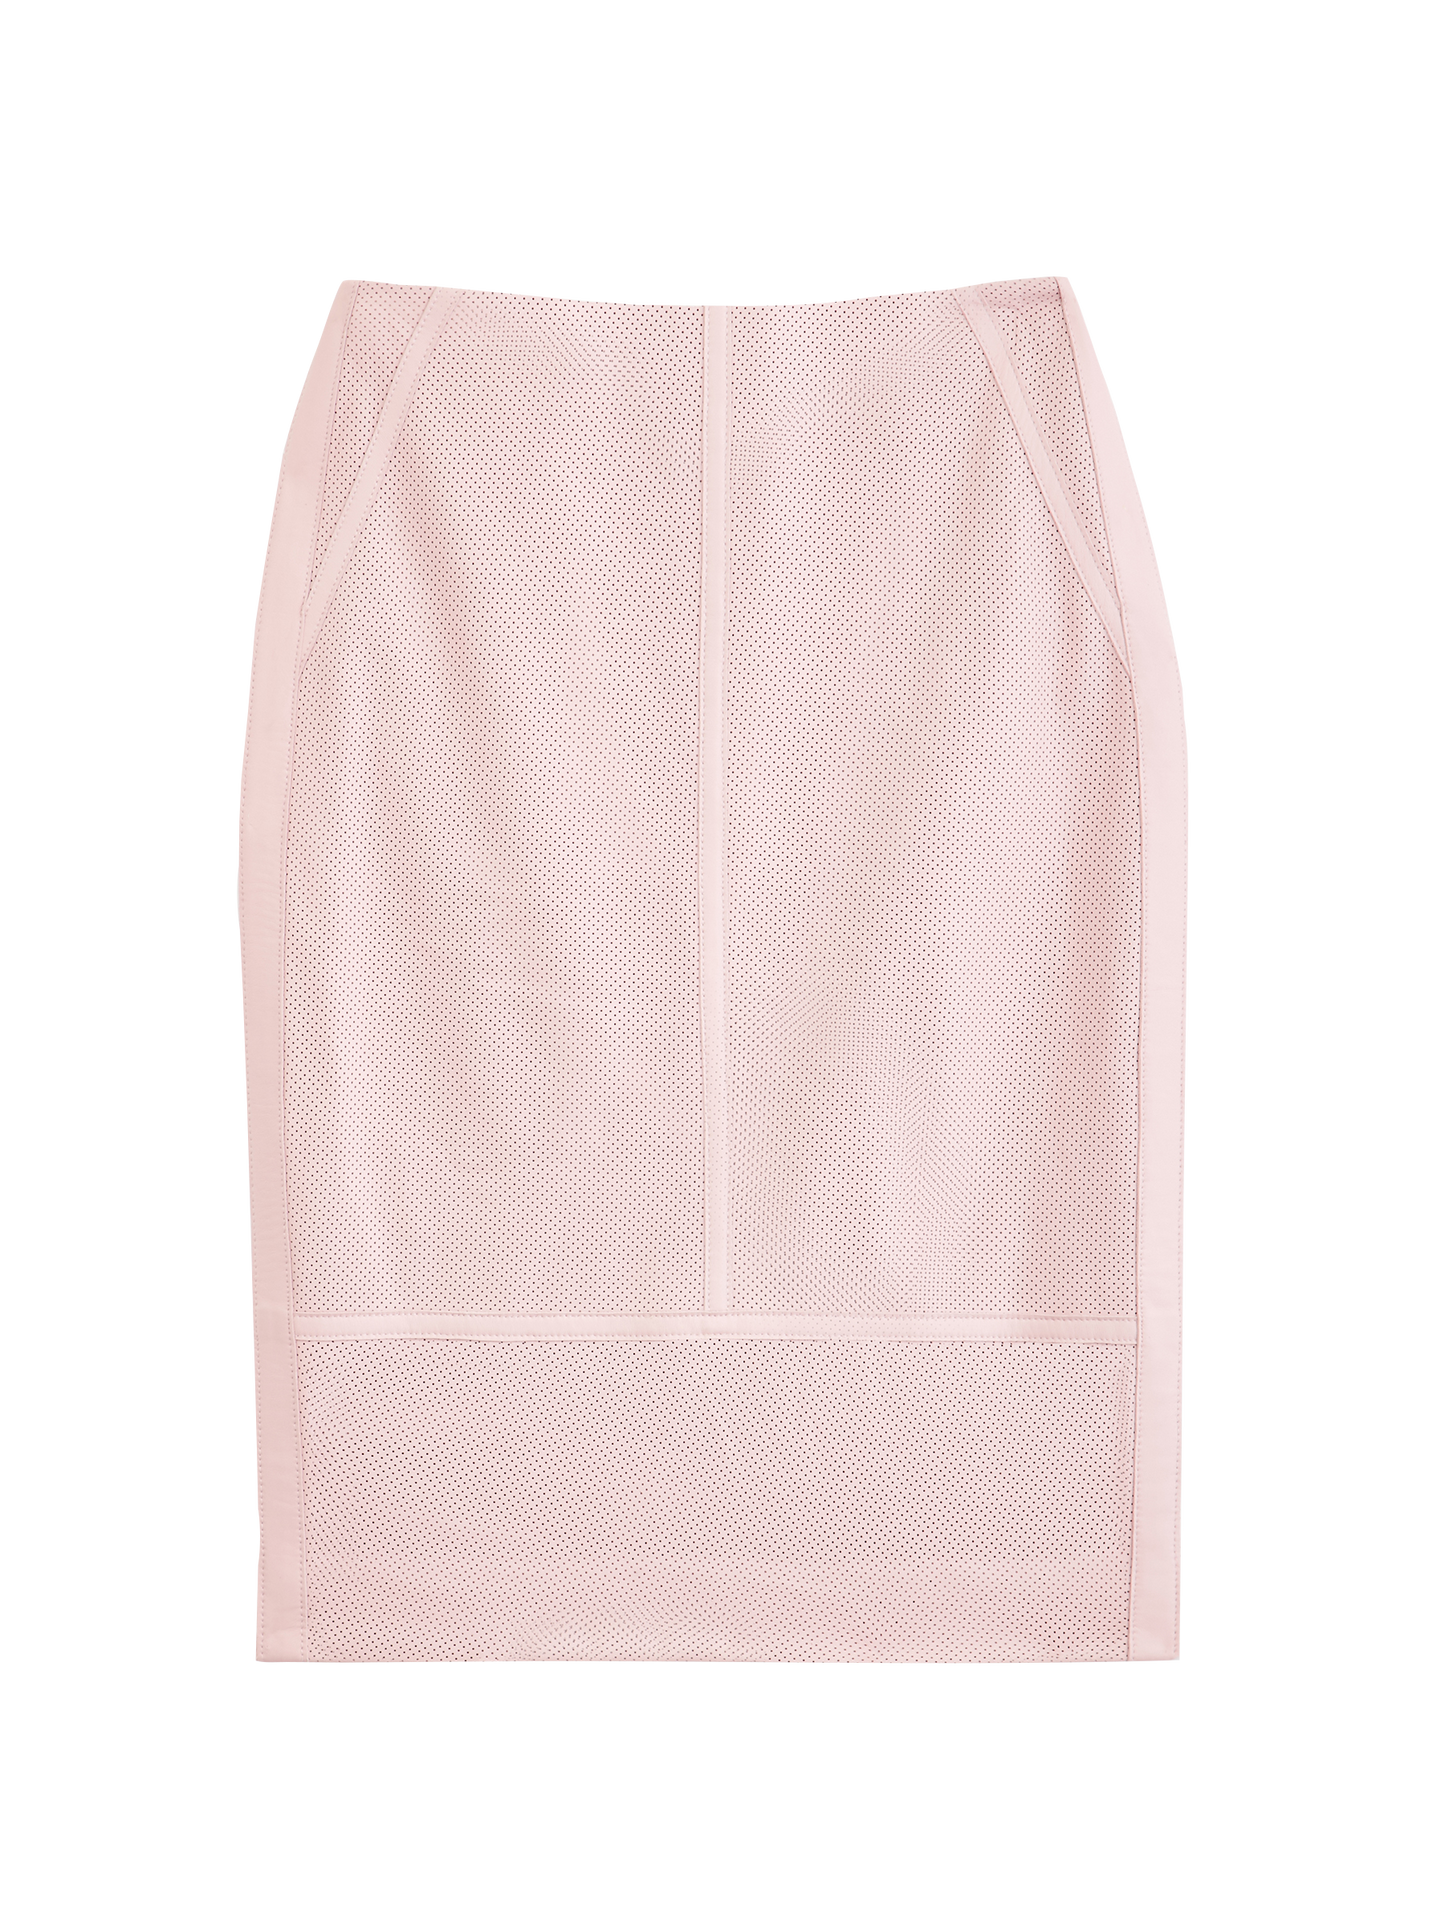 Memphis Skirt